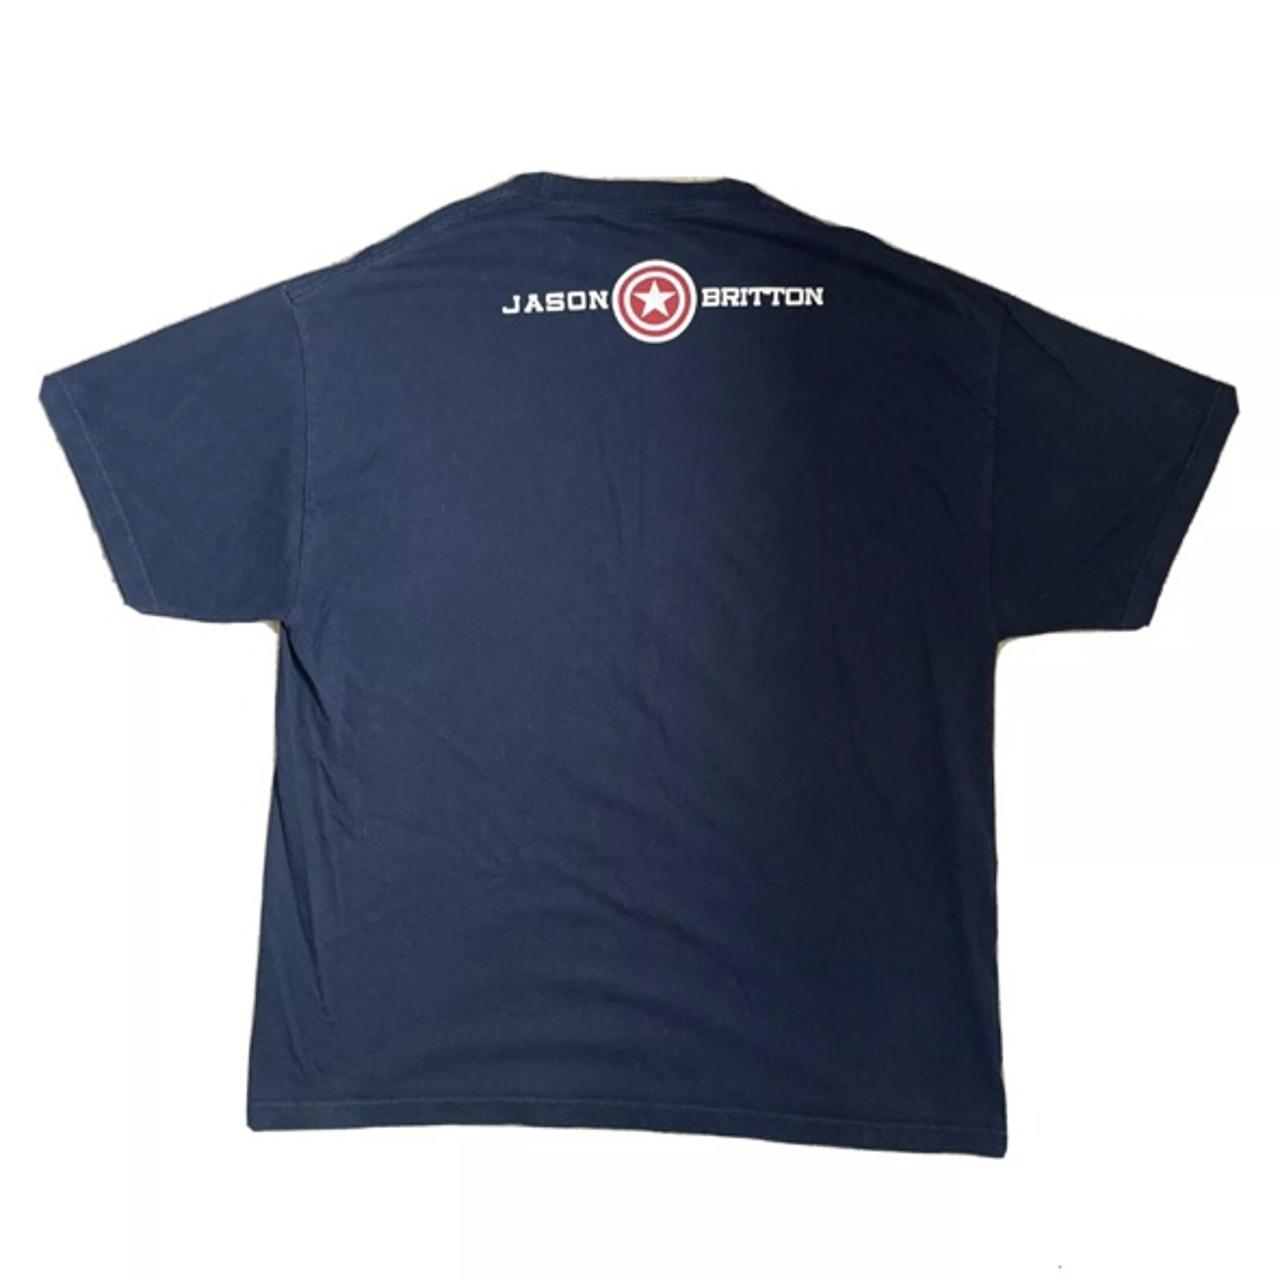 Unbranded Men's Navy T-shirt (2)